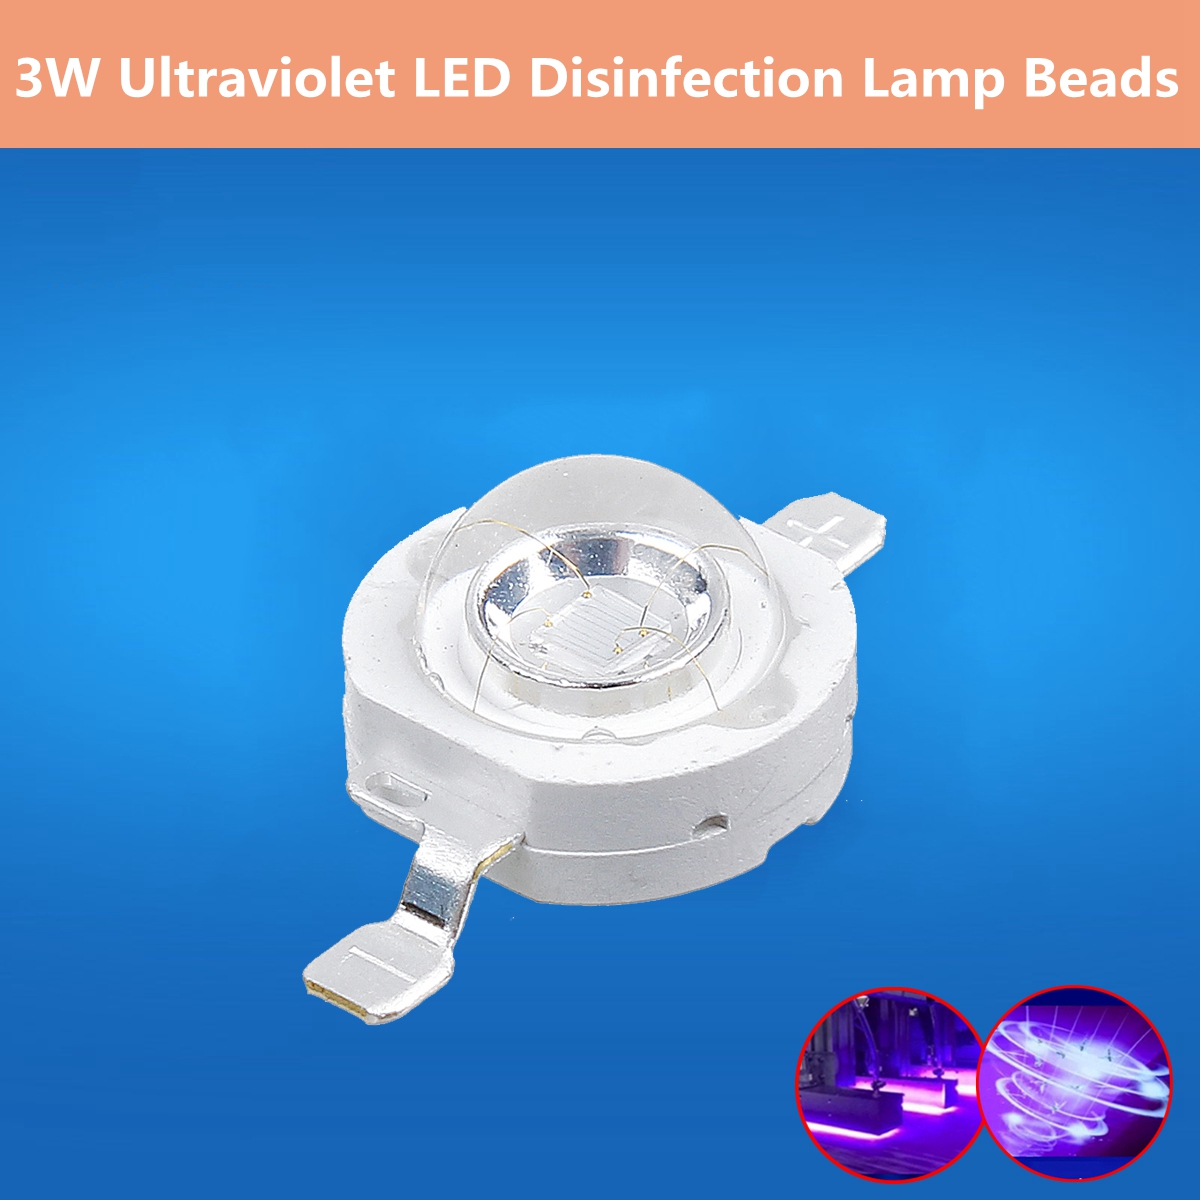 3W-High-Power-Vertical-Lamp-Beads-LED-Disinfecting-High-brightness-1694687-1